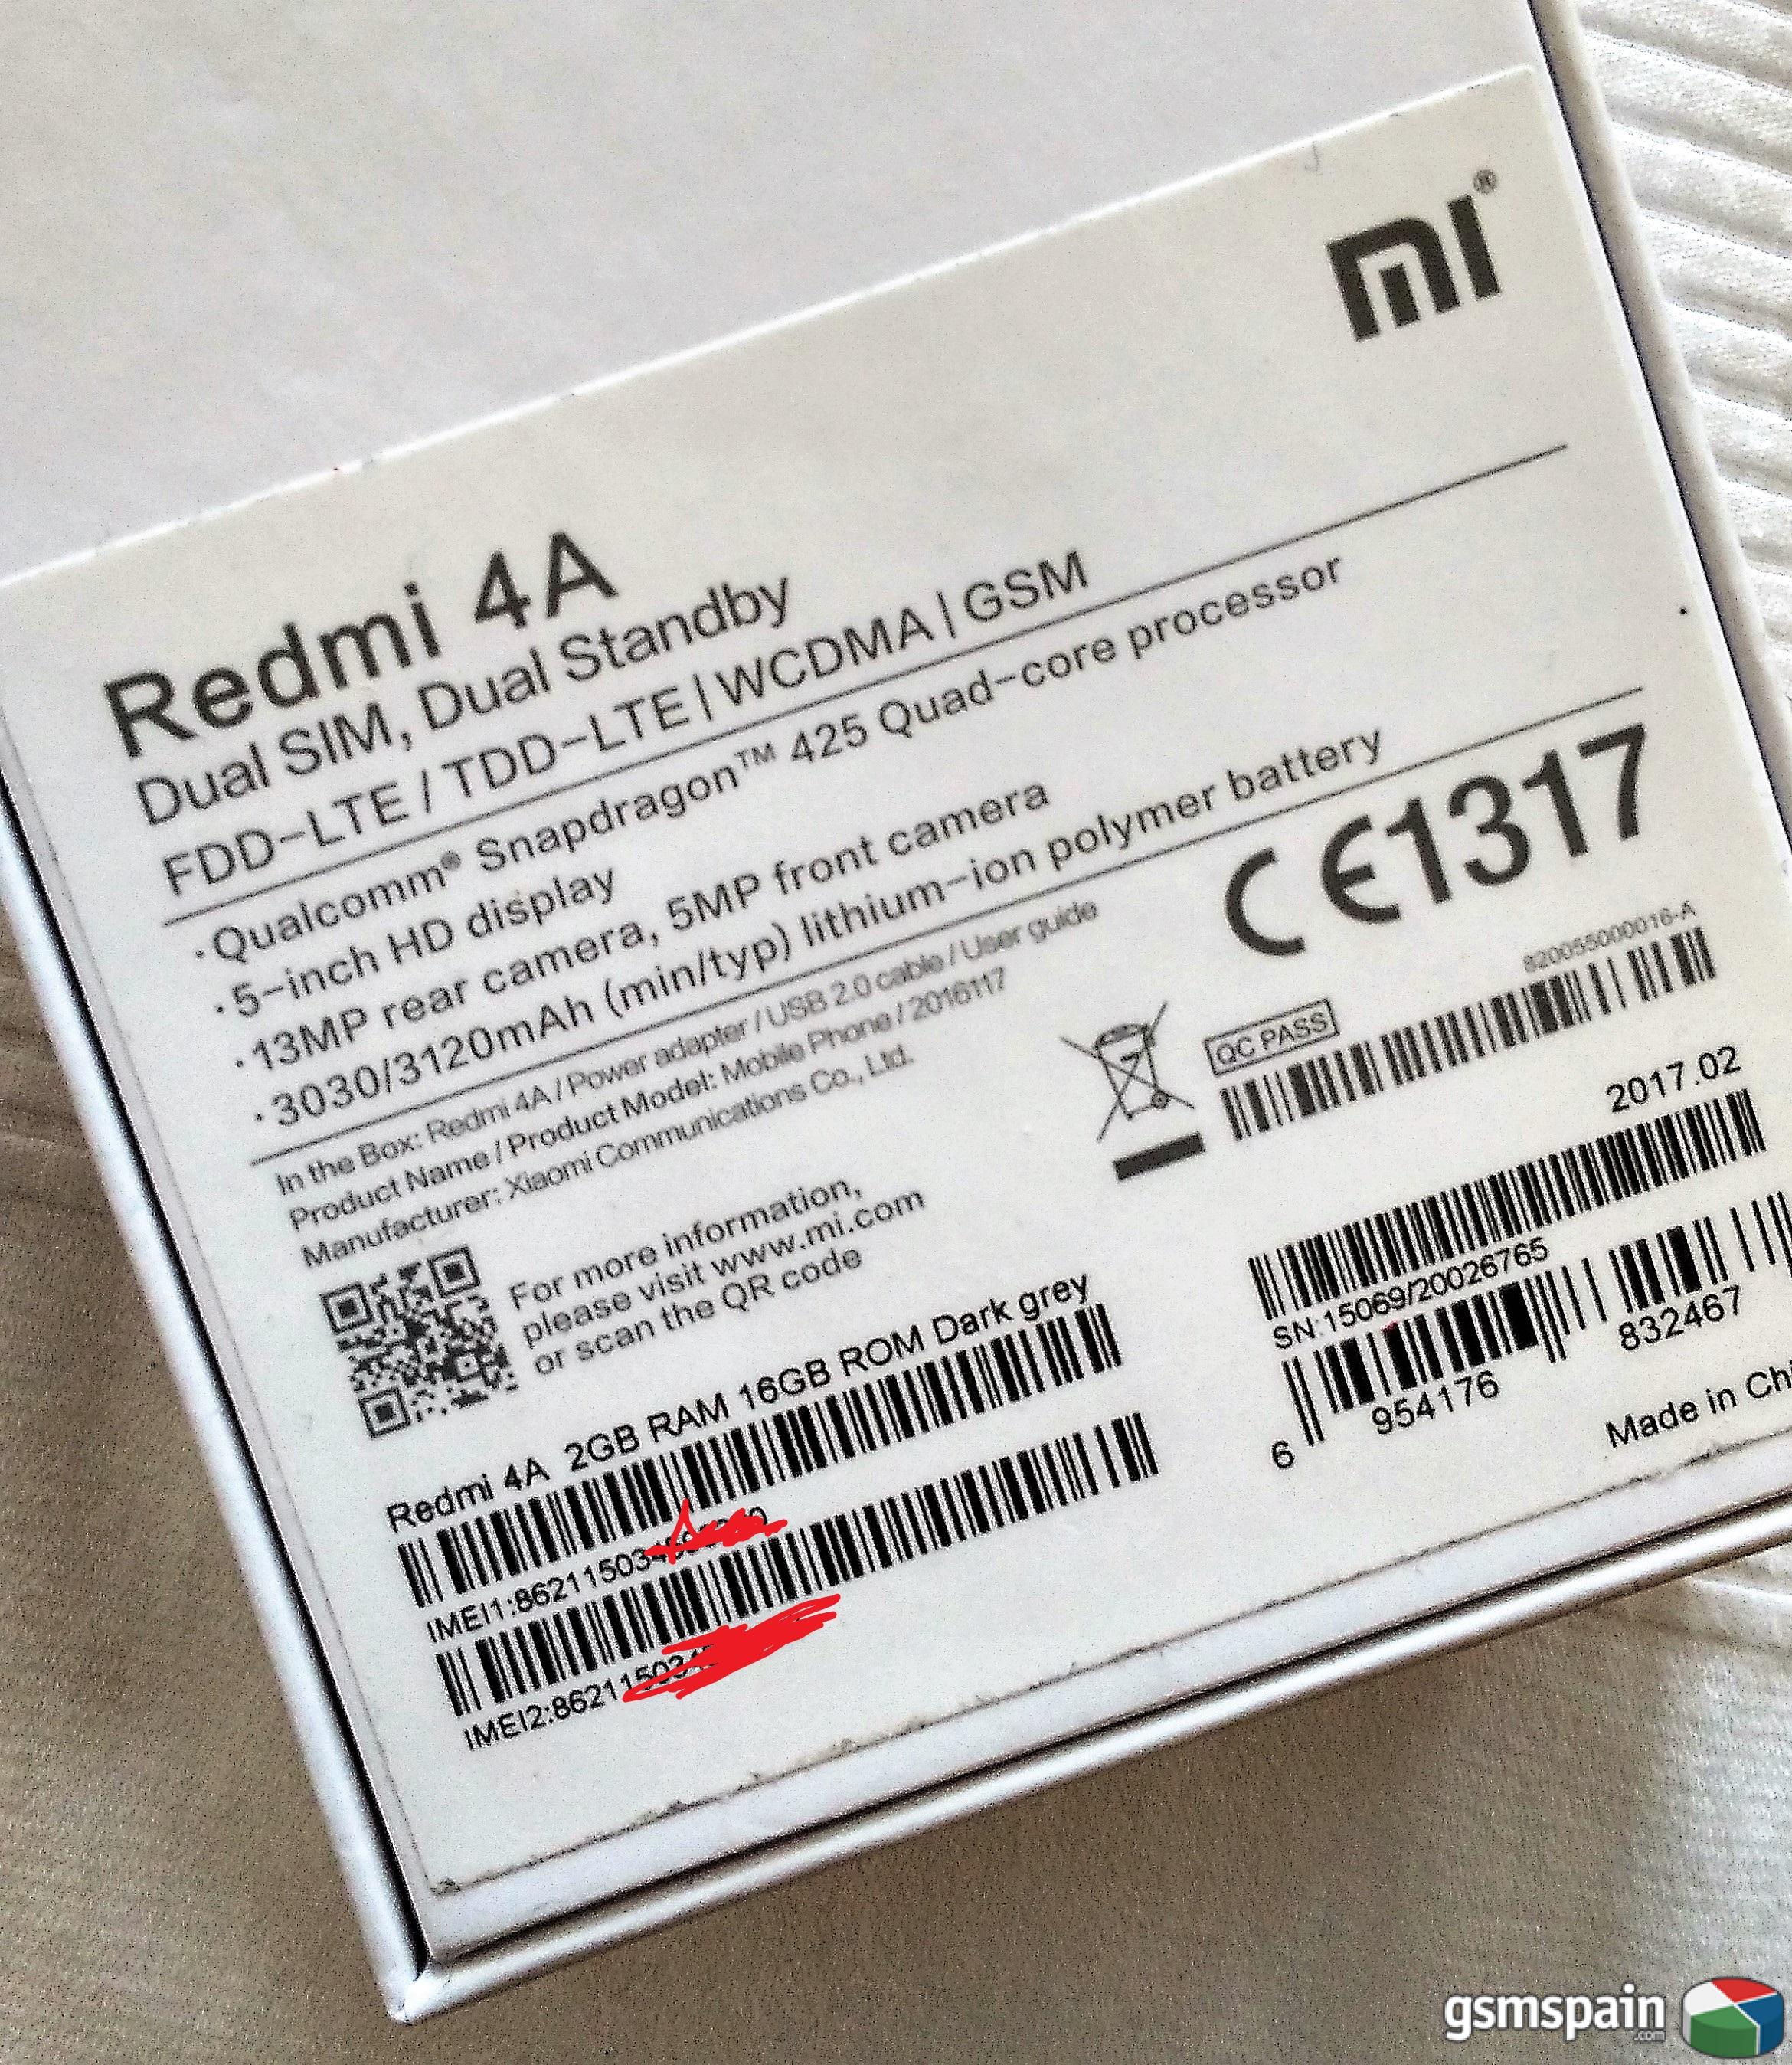 [VENDO] Xiaomi Redmi 4A Negro 2/16 IMPOLUTO (89.90  GI)